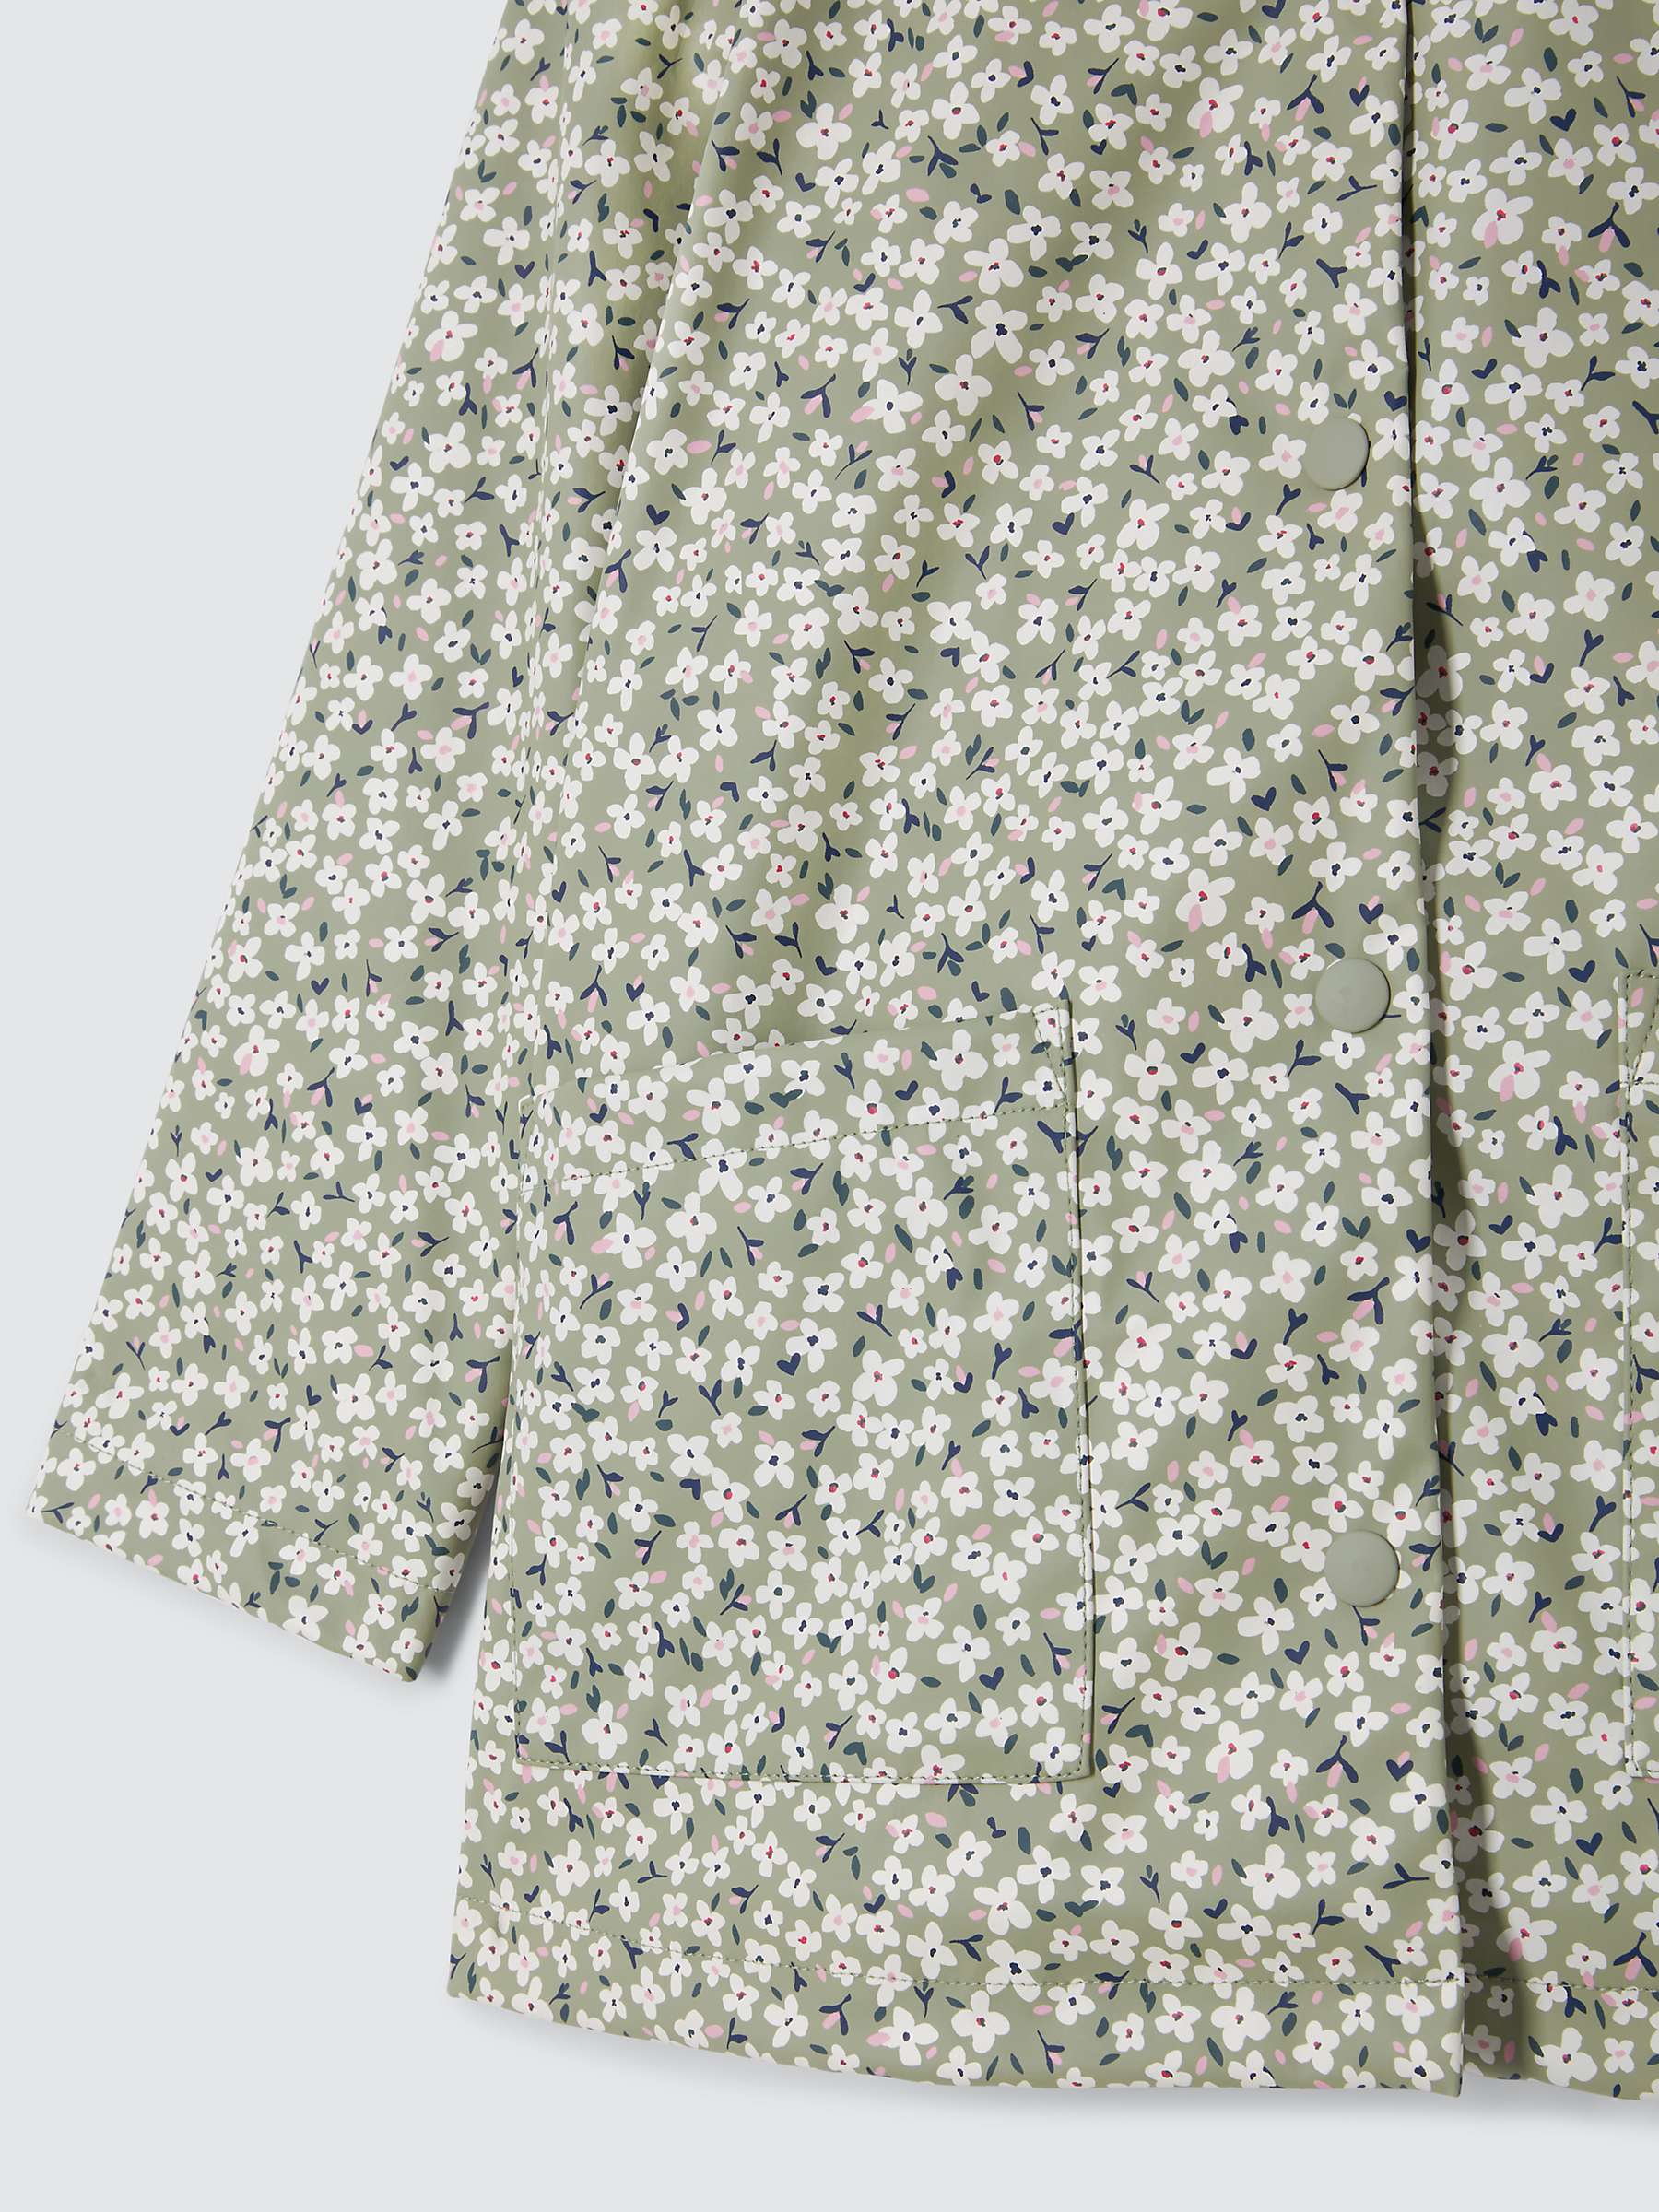 Buy John Lewis Kids' Floral Print Shower Resistant Hooded Mac, Green/Multi Online at johnlewis.com